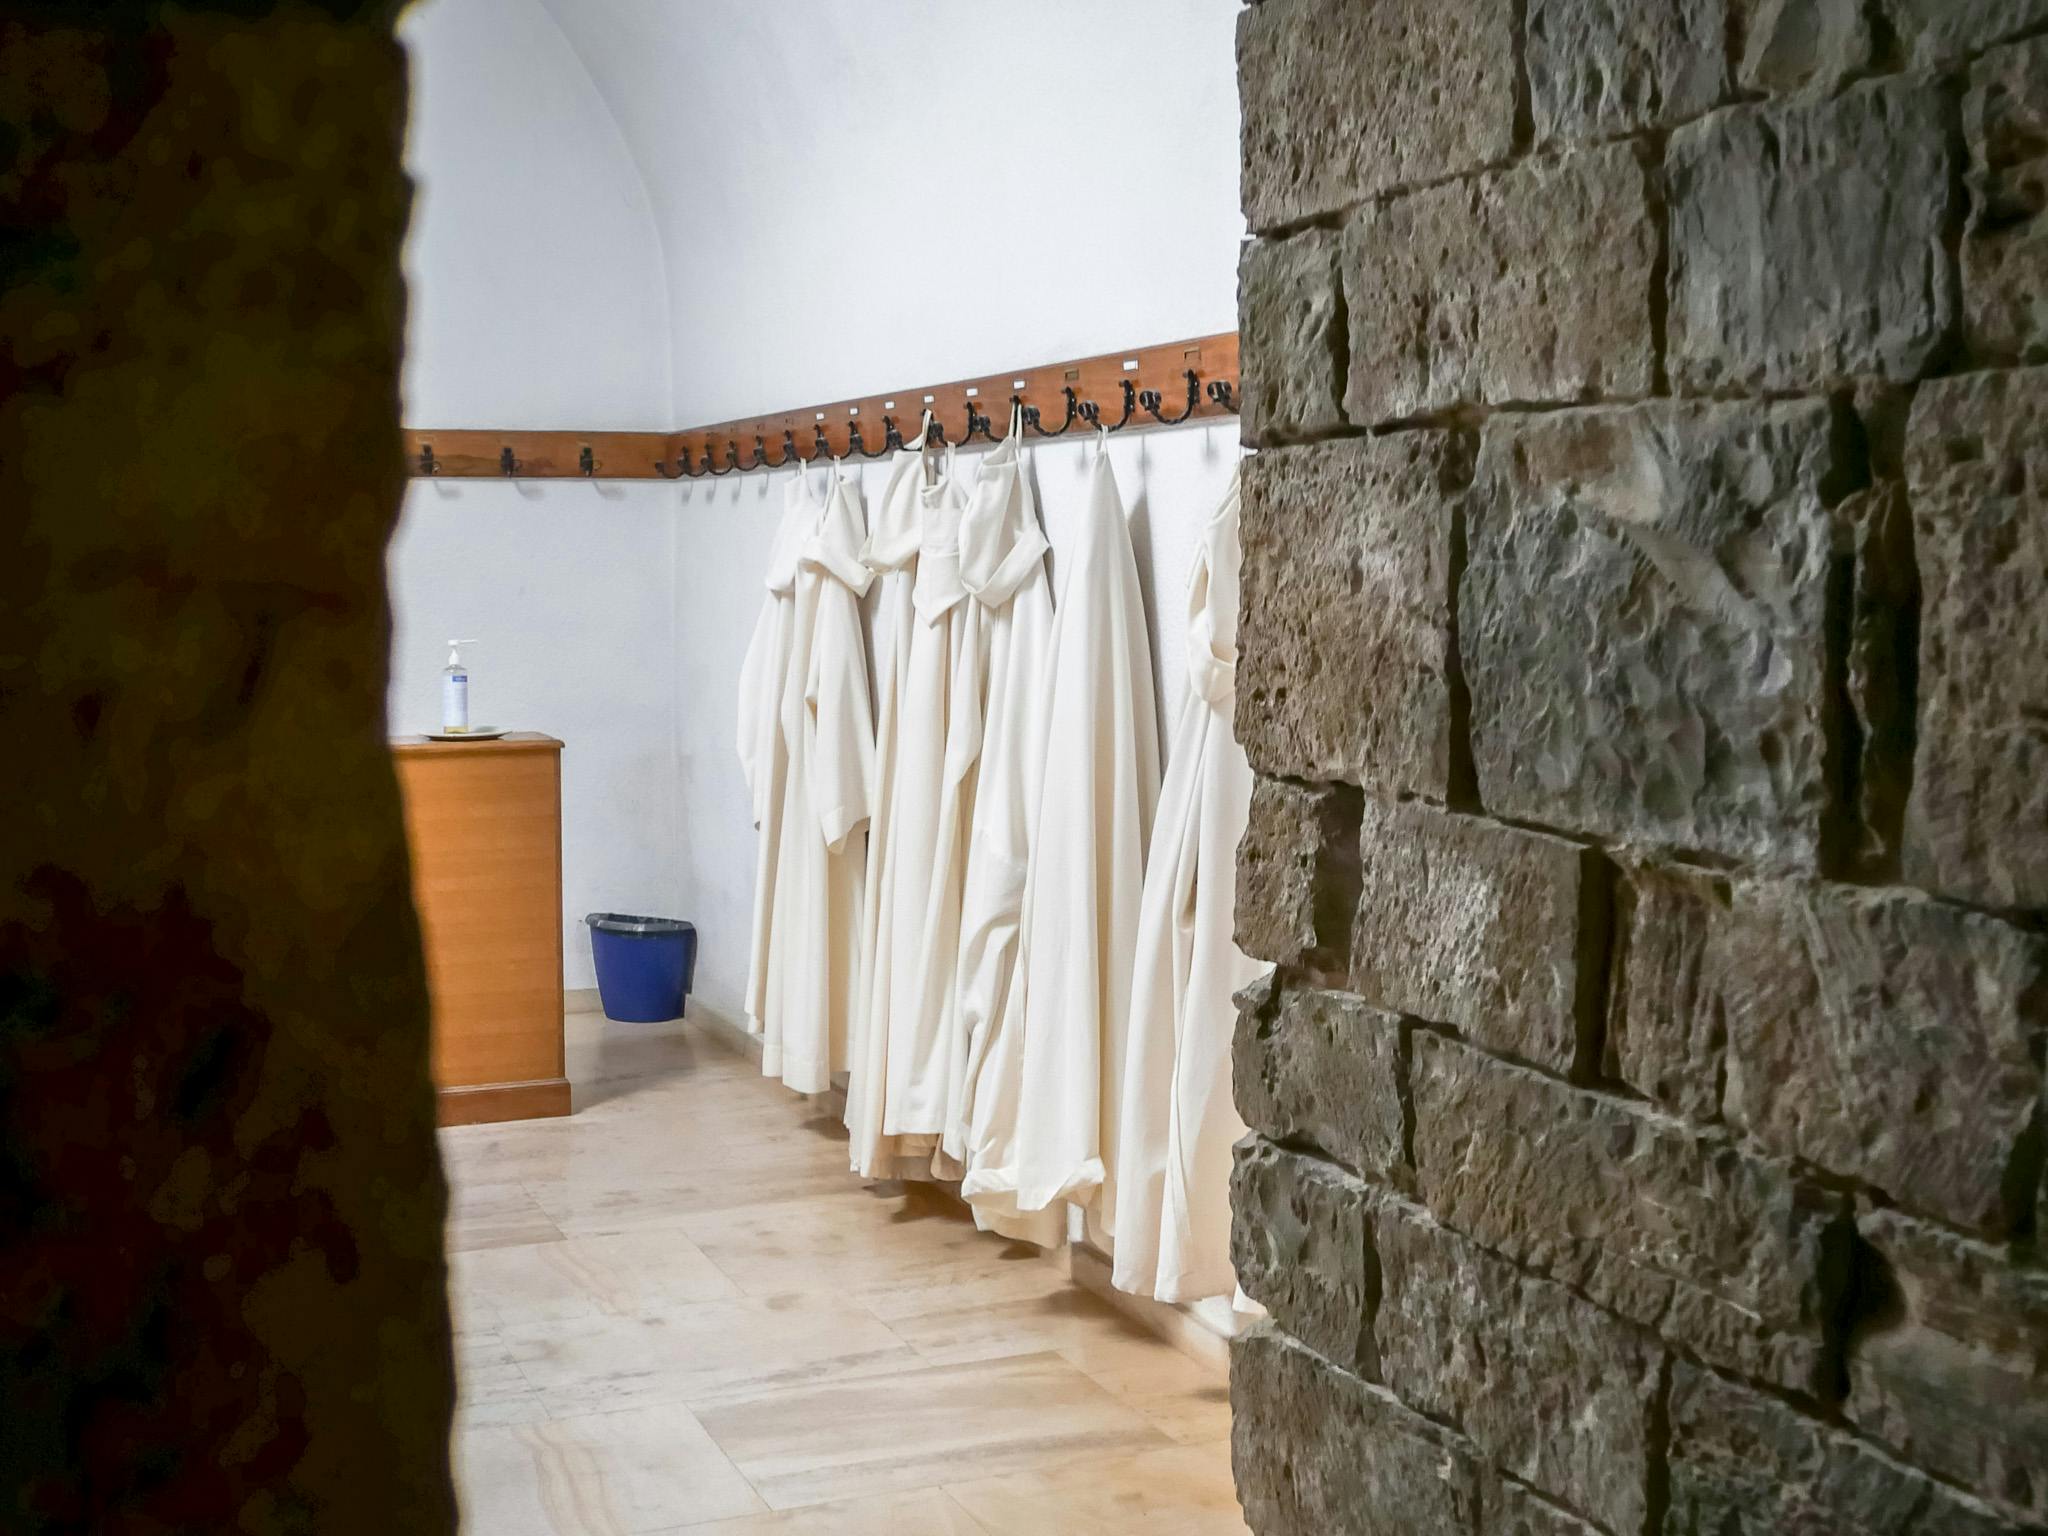 The prayer Cowls of the monastics of Lerins